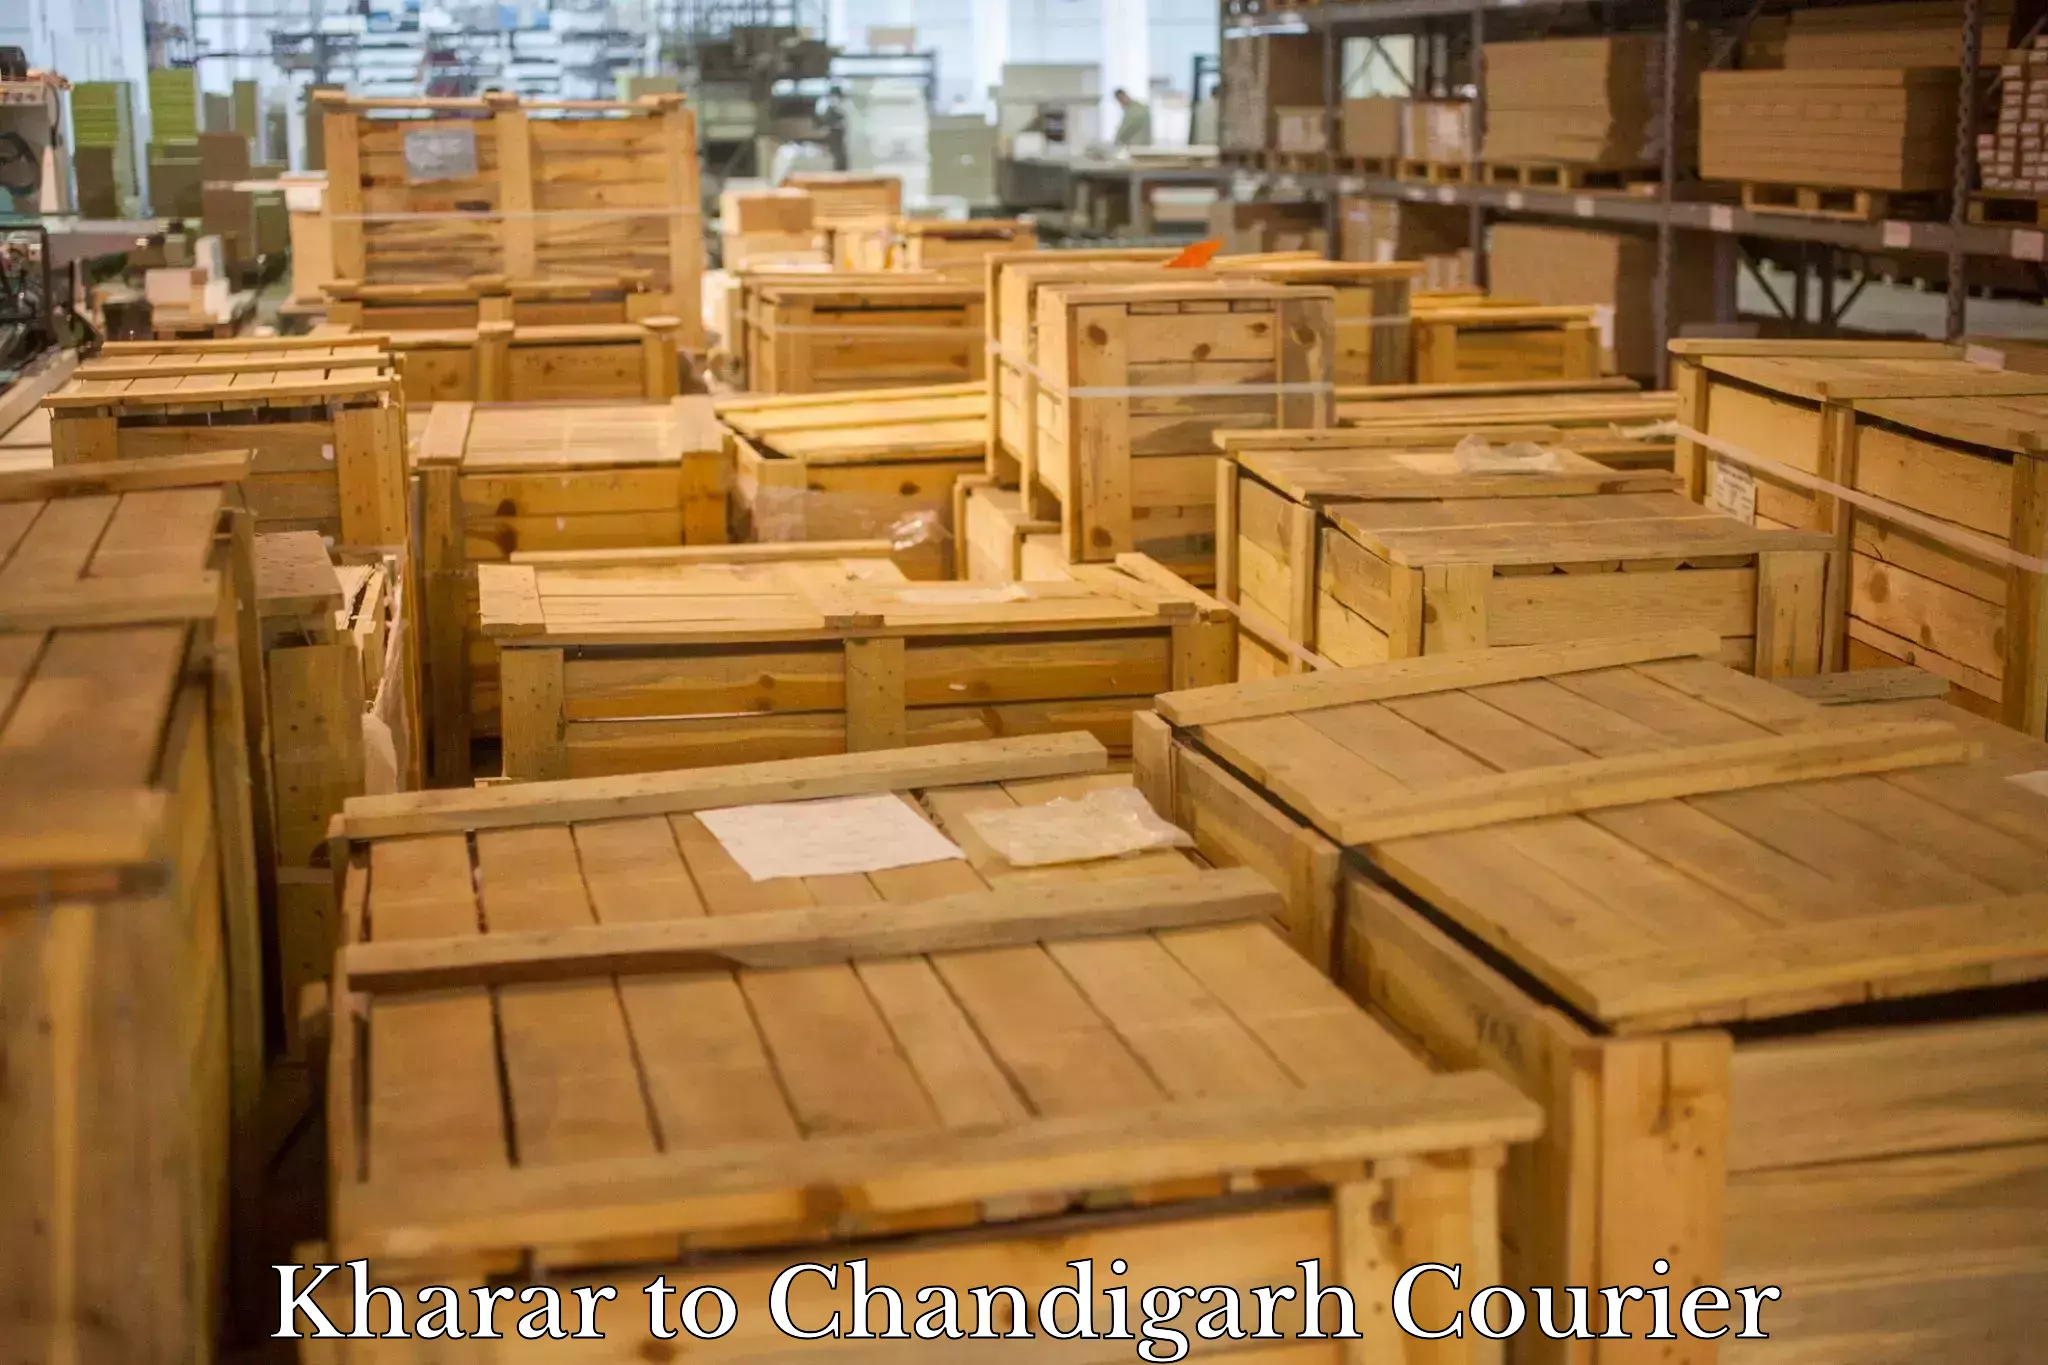 High-capacity parcel service Kharar to Chandigarh